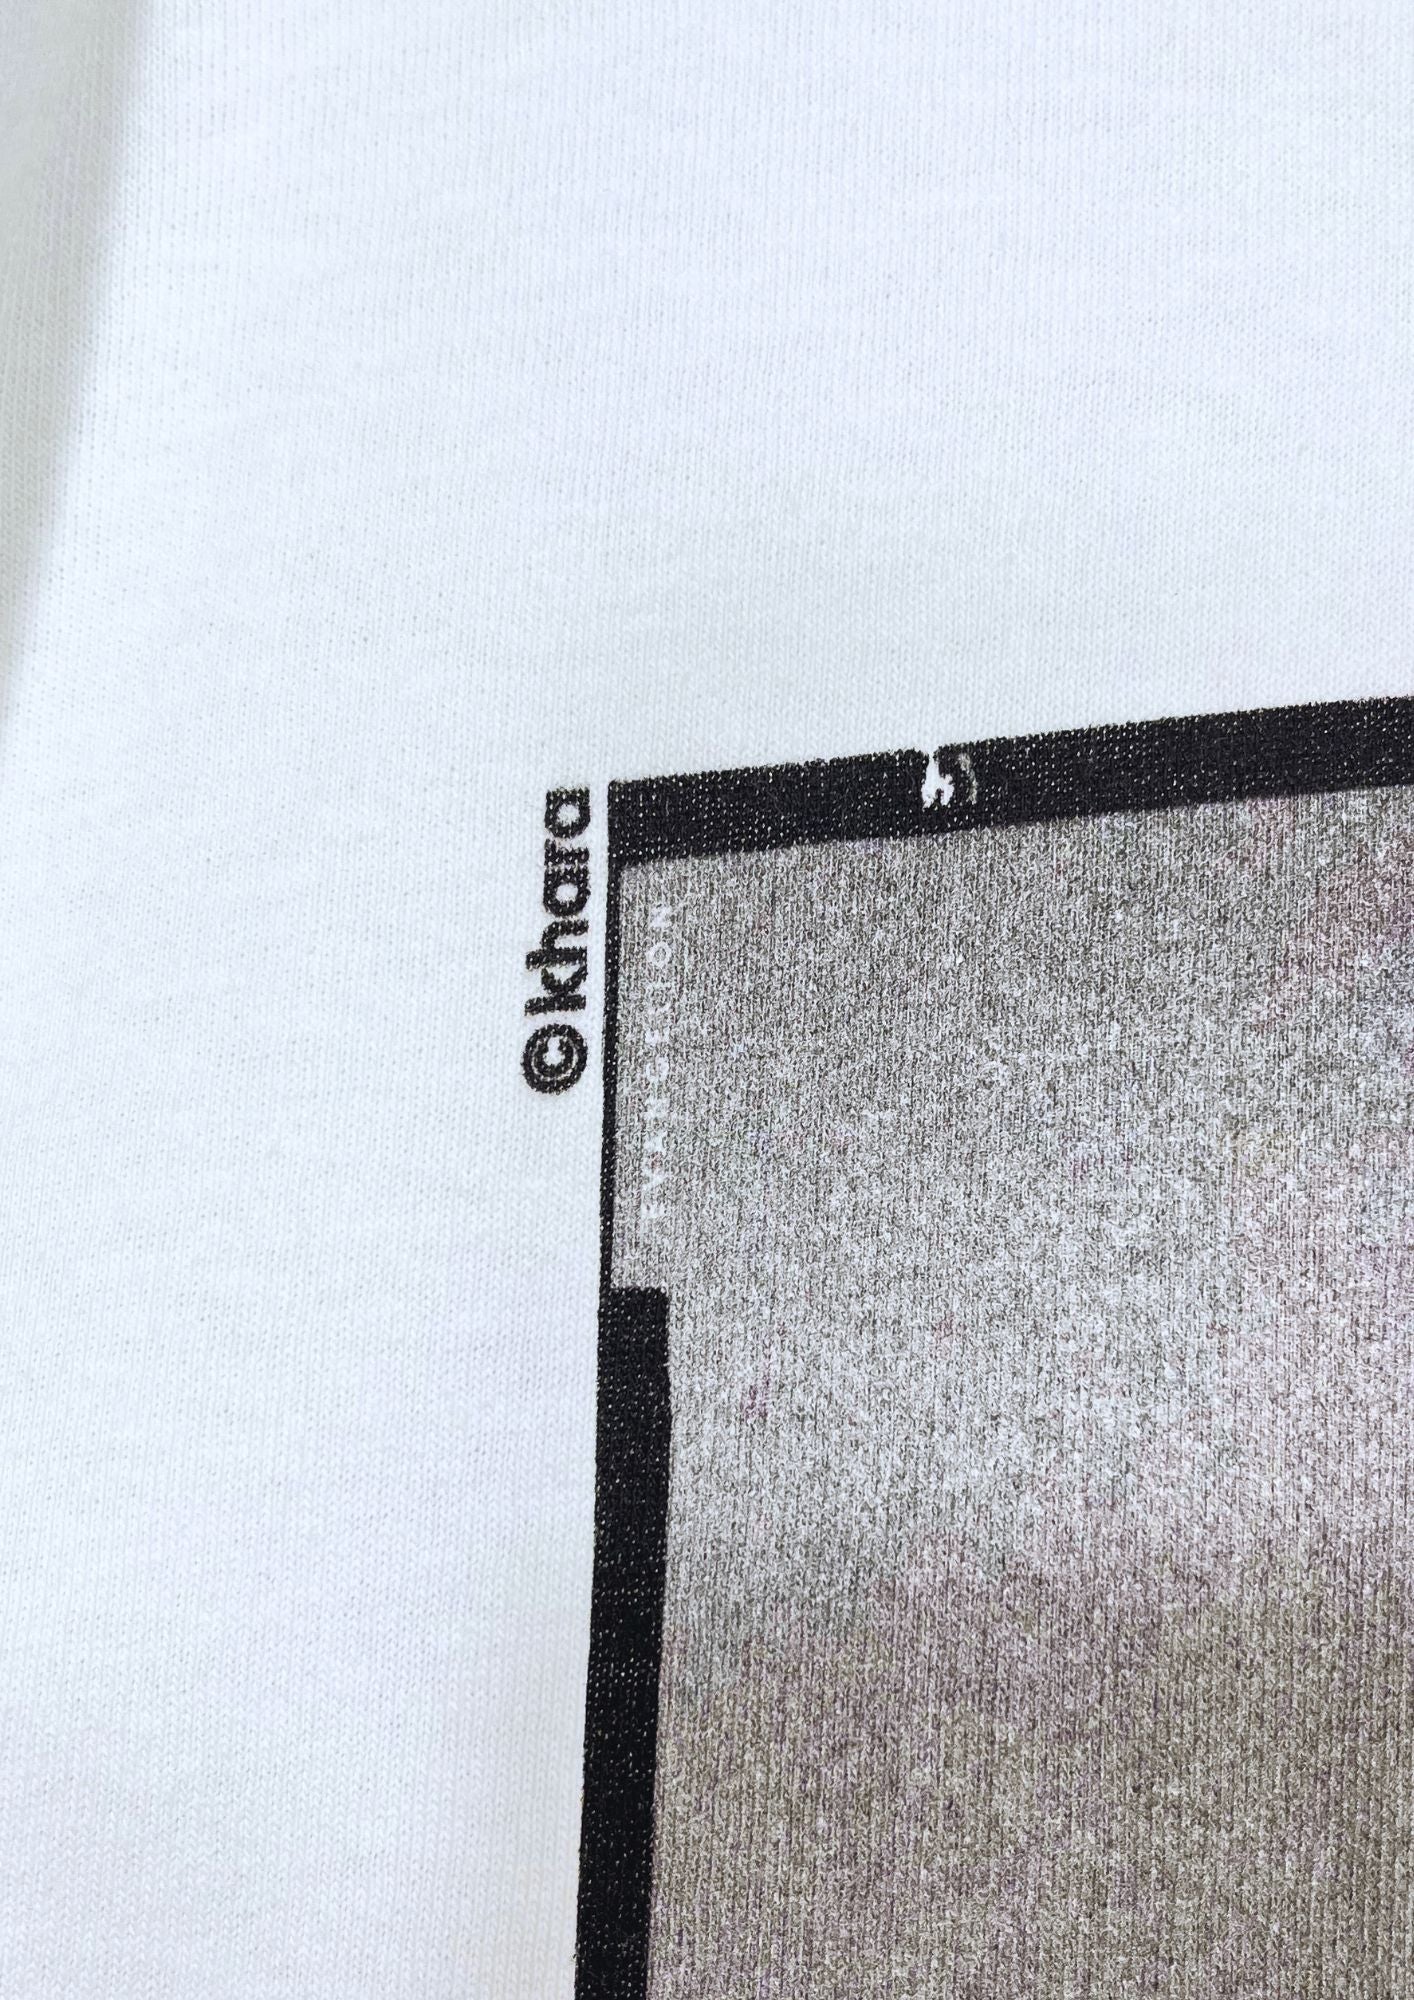 2020 Neon Genesis Evangelion x Flagstuff Rei Ayanami T-shirt